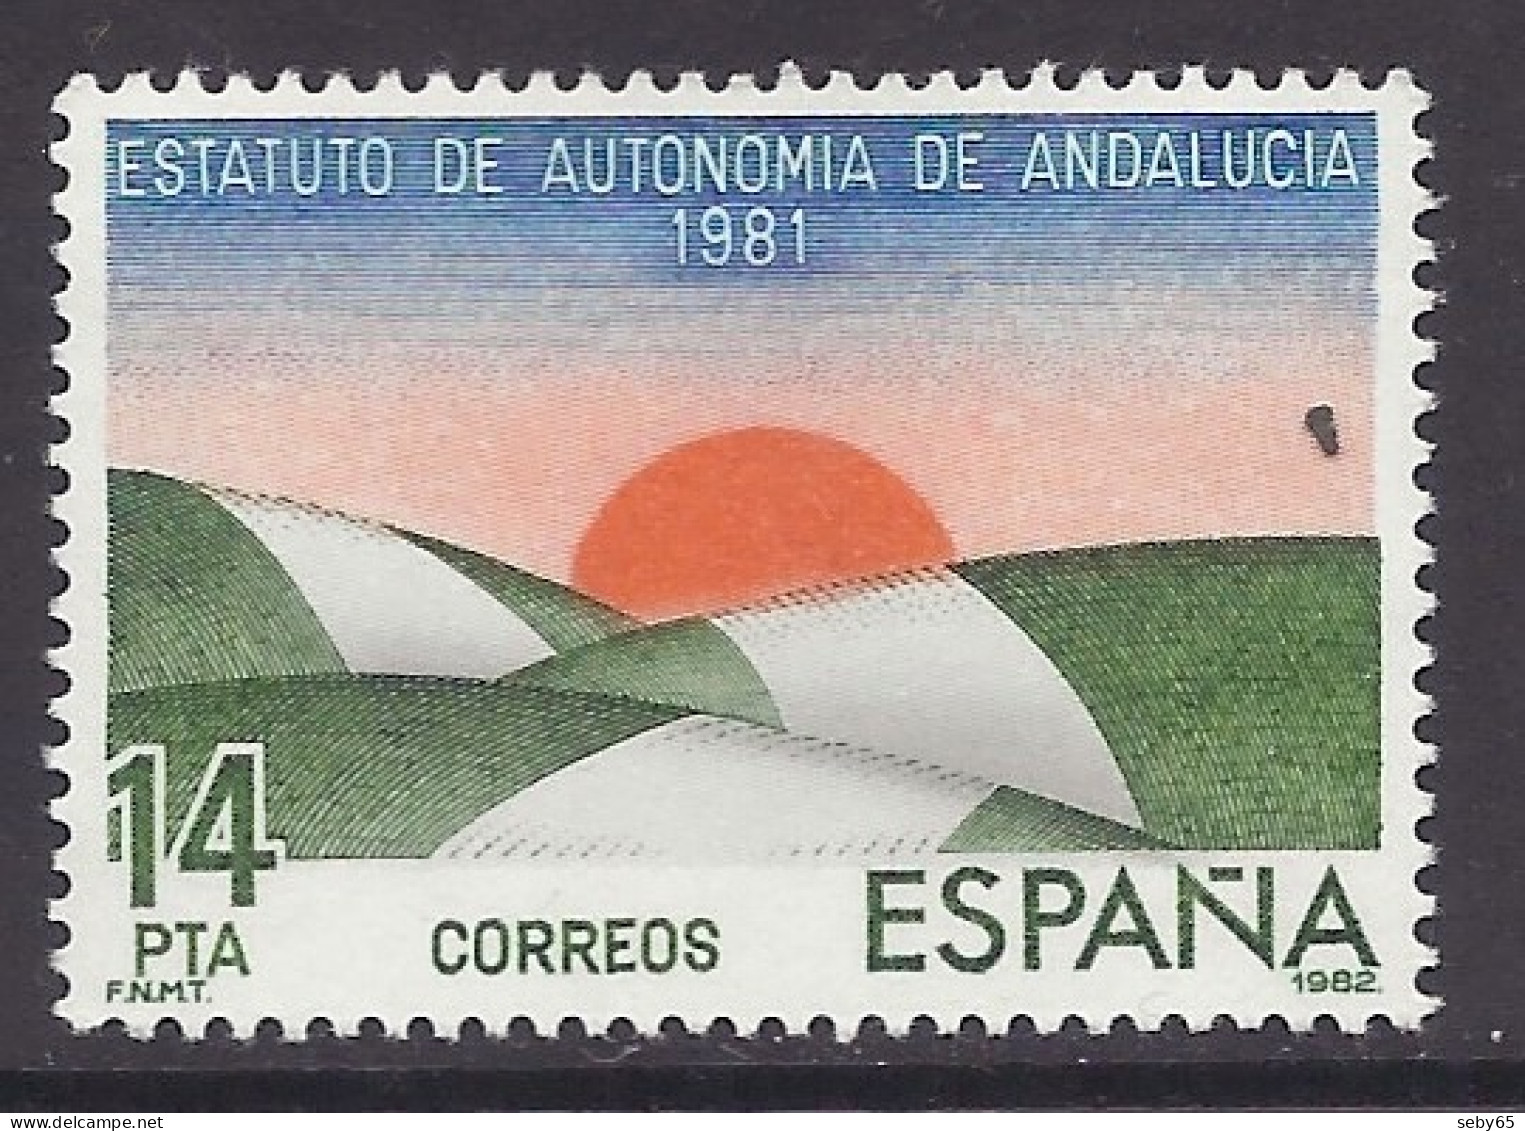 Spain 1983 - Estatutos De Autonomías, Region De Andalucia, Andalusia, Sun Sunrise, Emblem - MNH - Nuevos